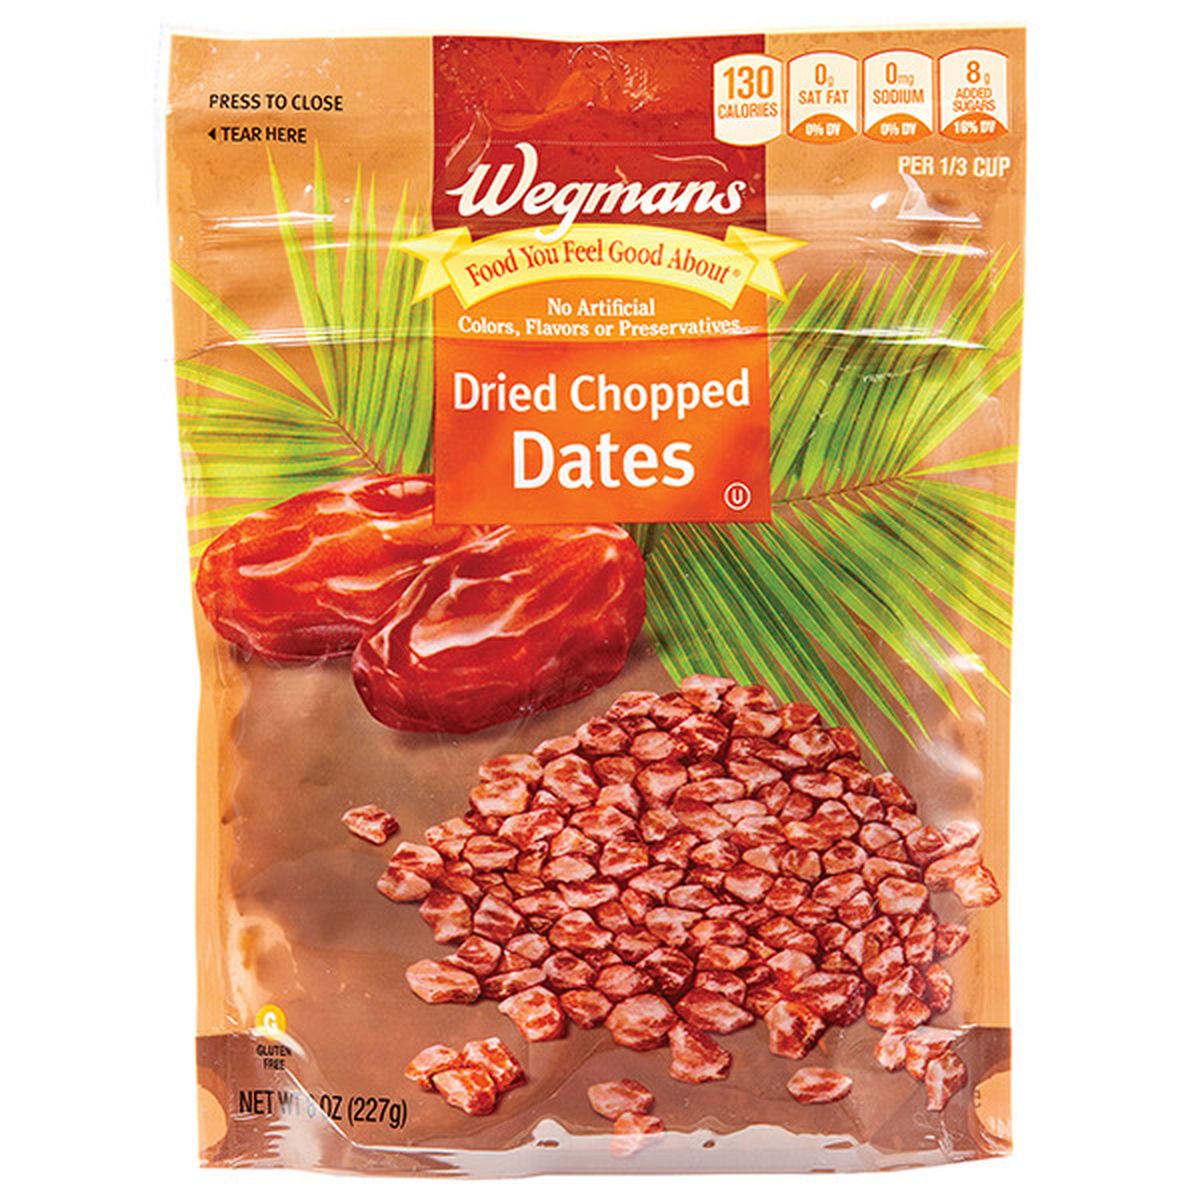 Calories in Wegmans Dried Chopped Dates